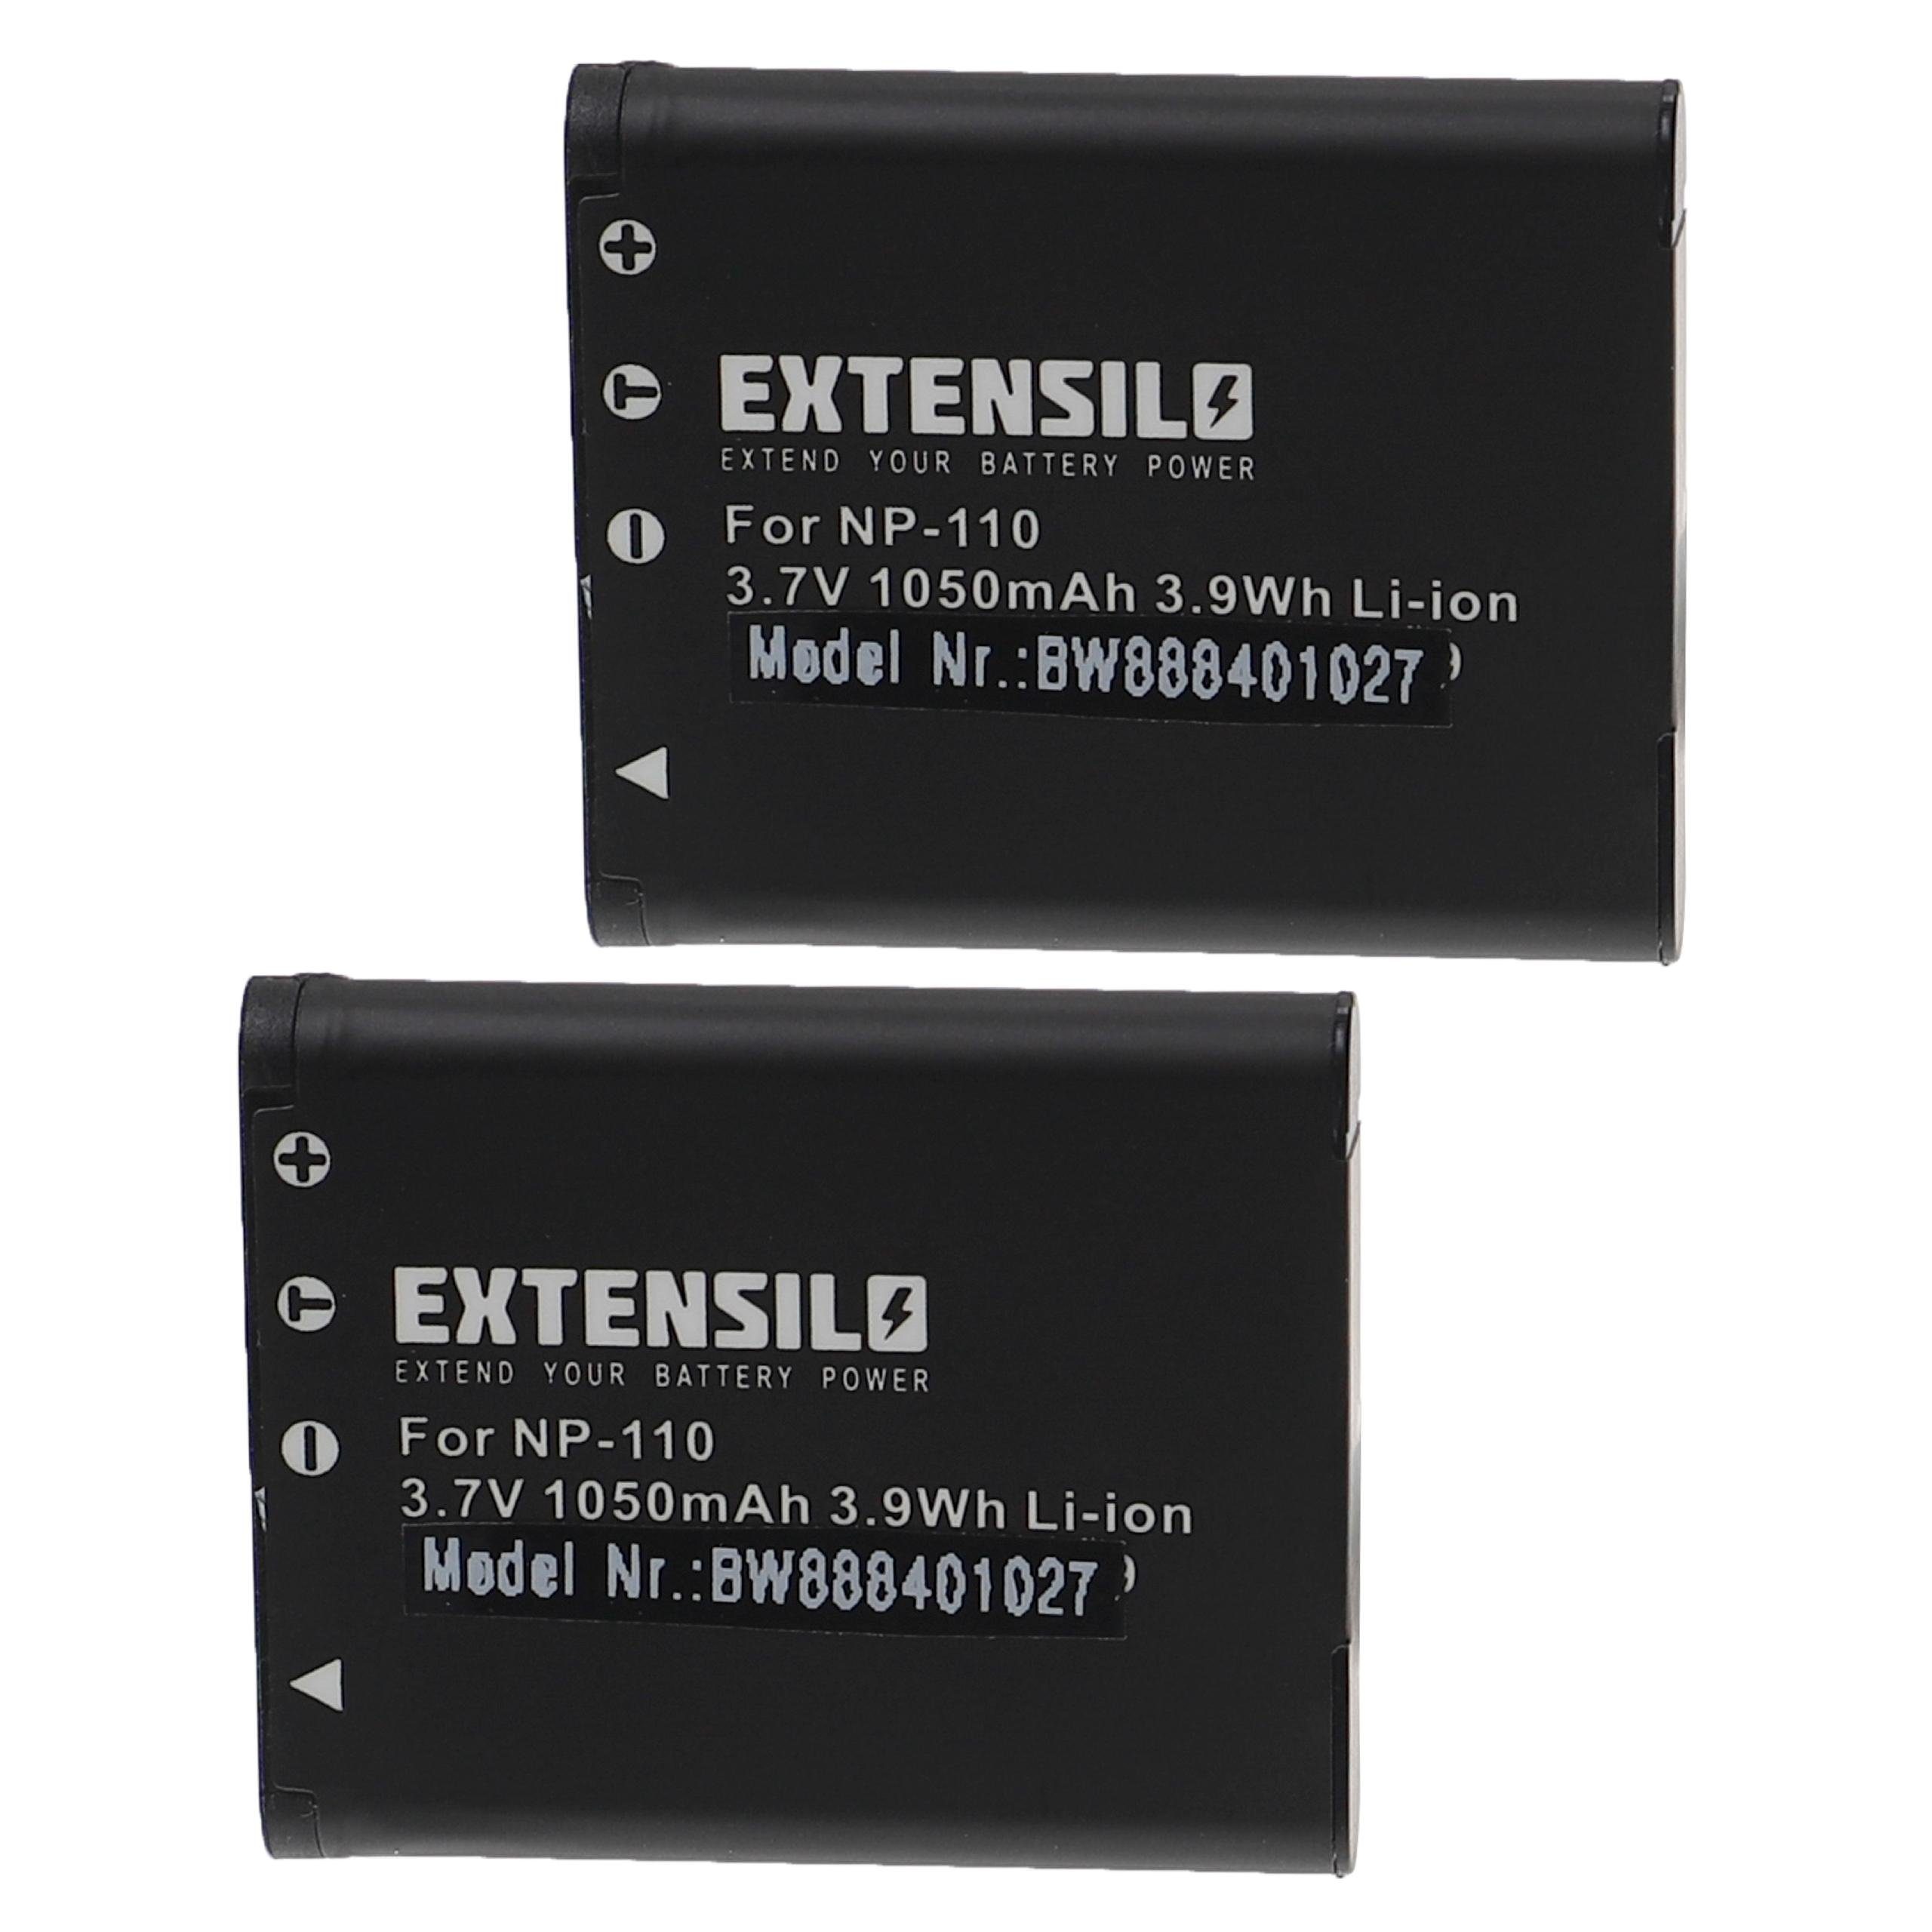 Casio EX-FC500S, EX-ZR10, Exilim mAh 1050 Kamera-Akku EX-FC200S, für passend EX-Z3000, Extensilo